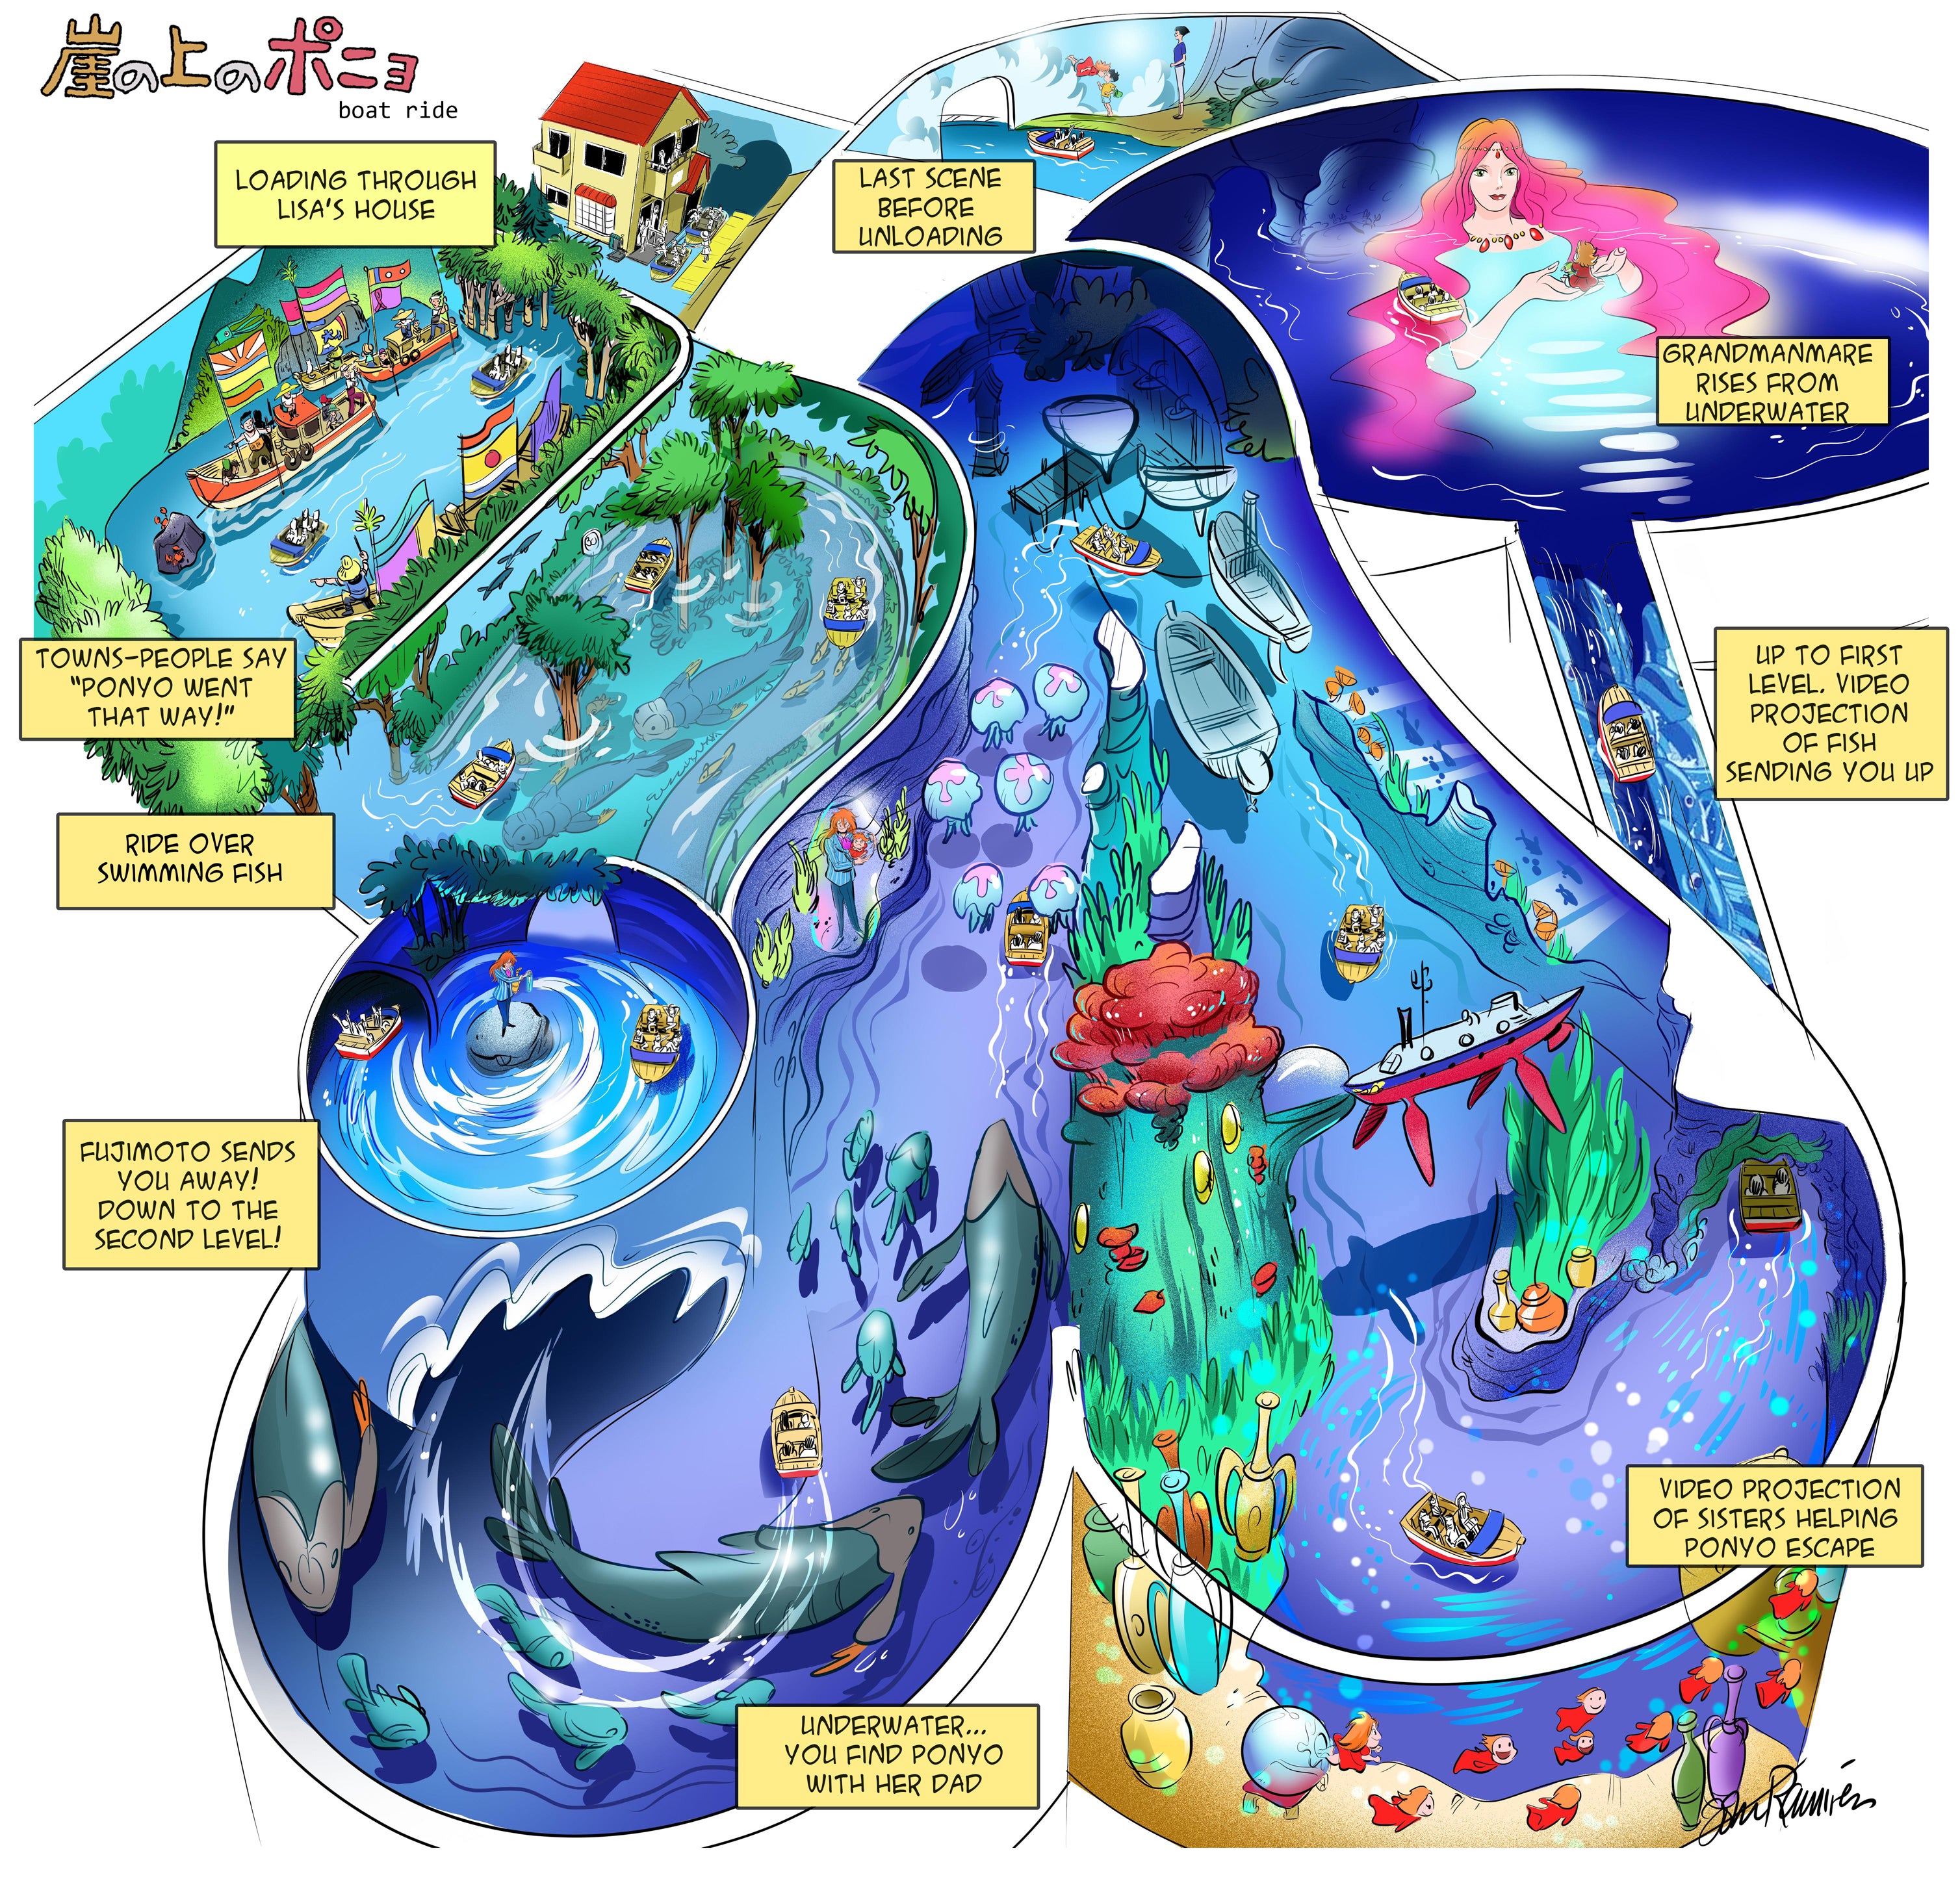 Disney Theme Park Designer Imagines Terrific Studio Ghibli